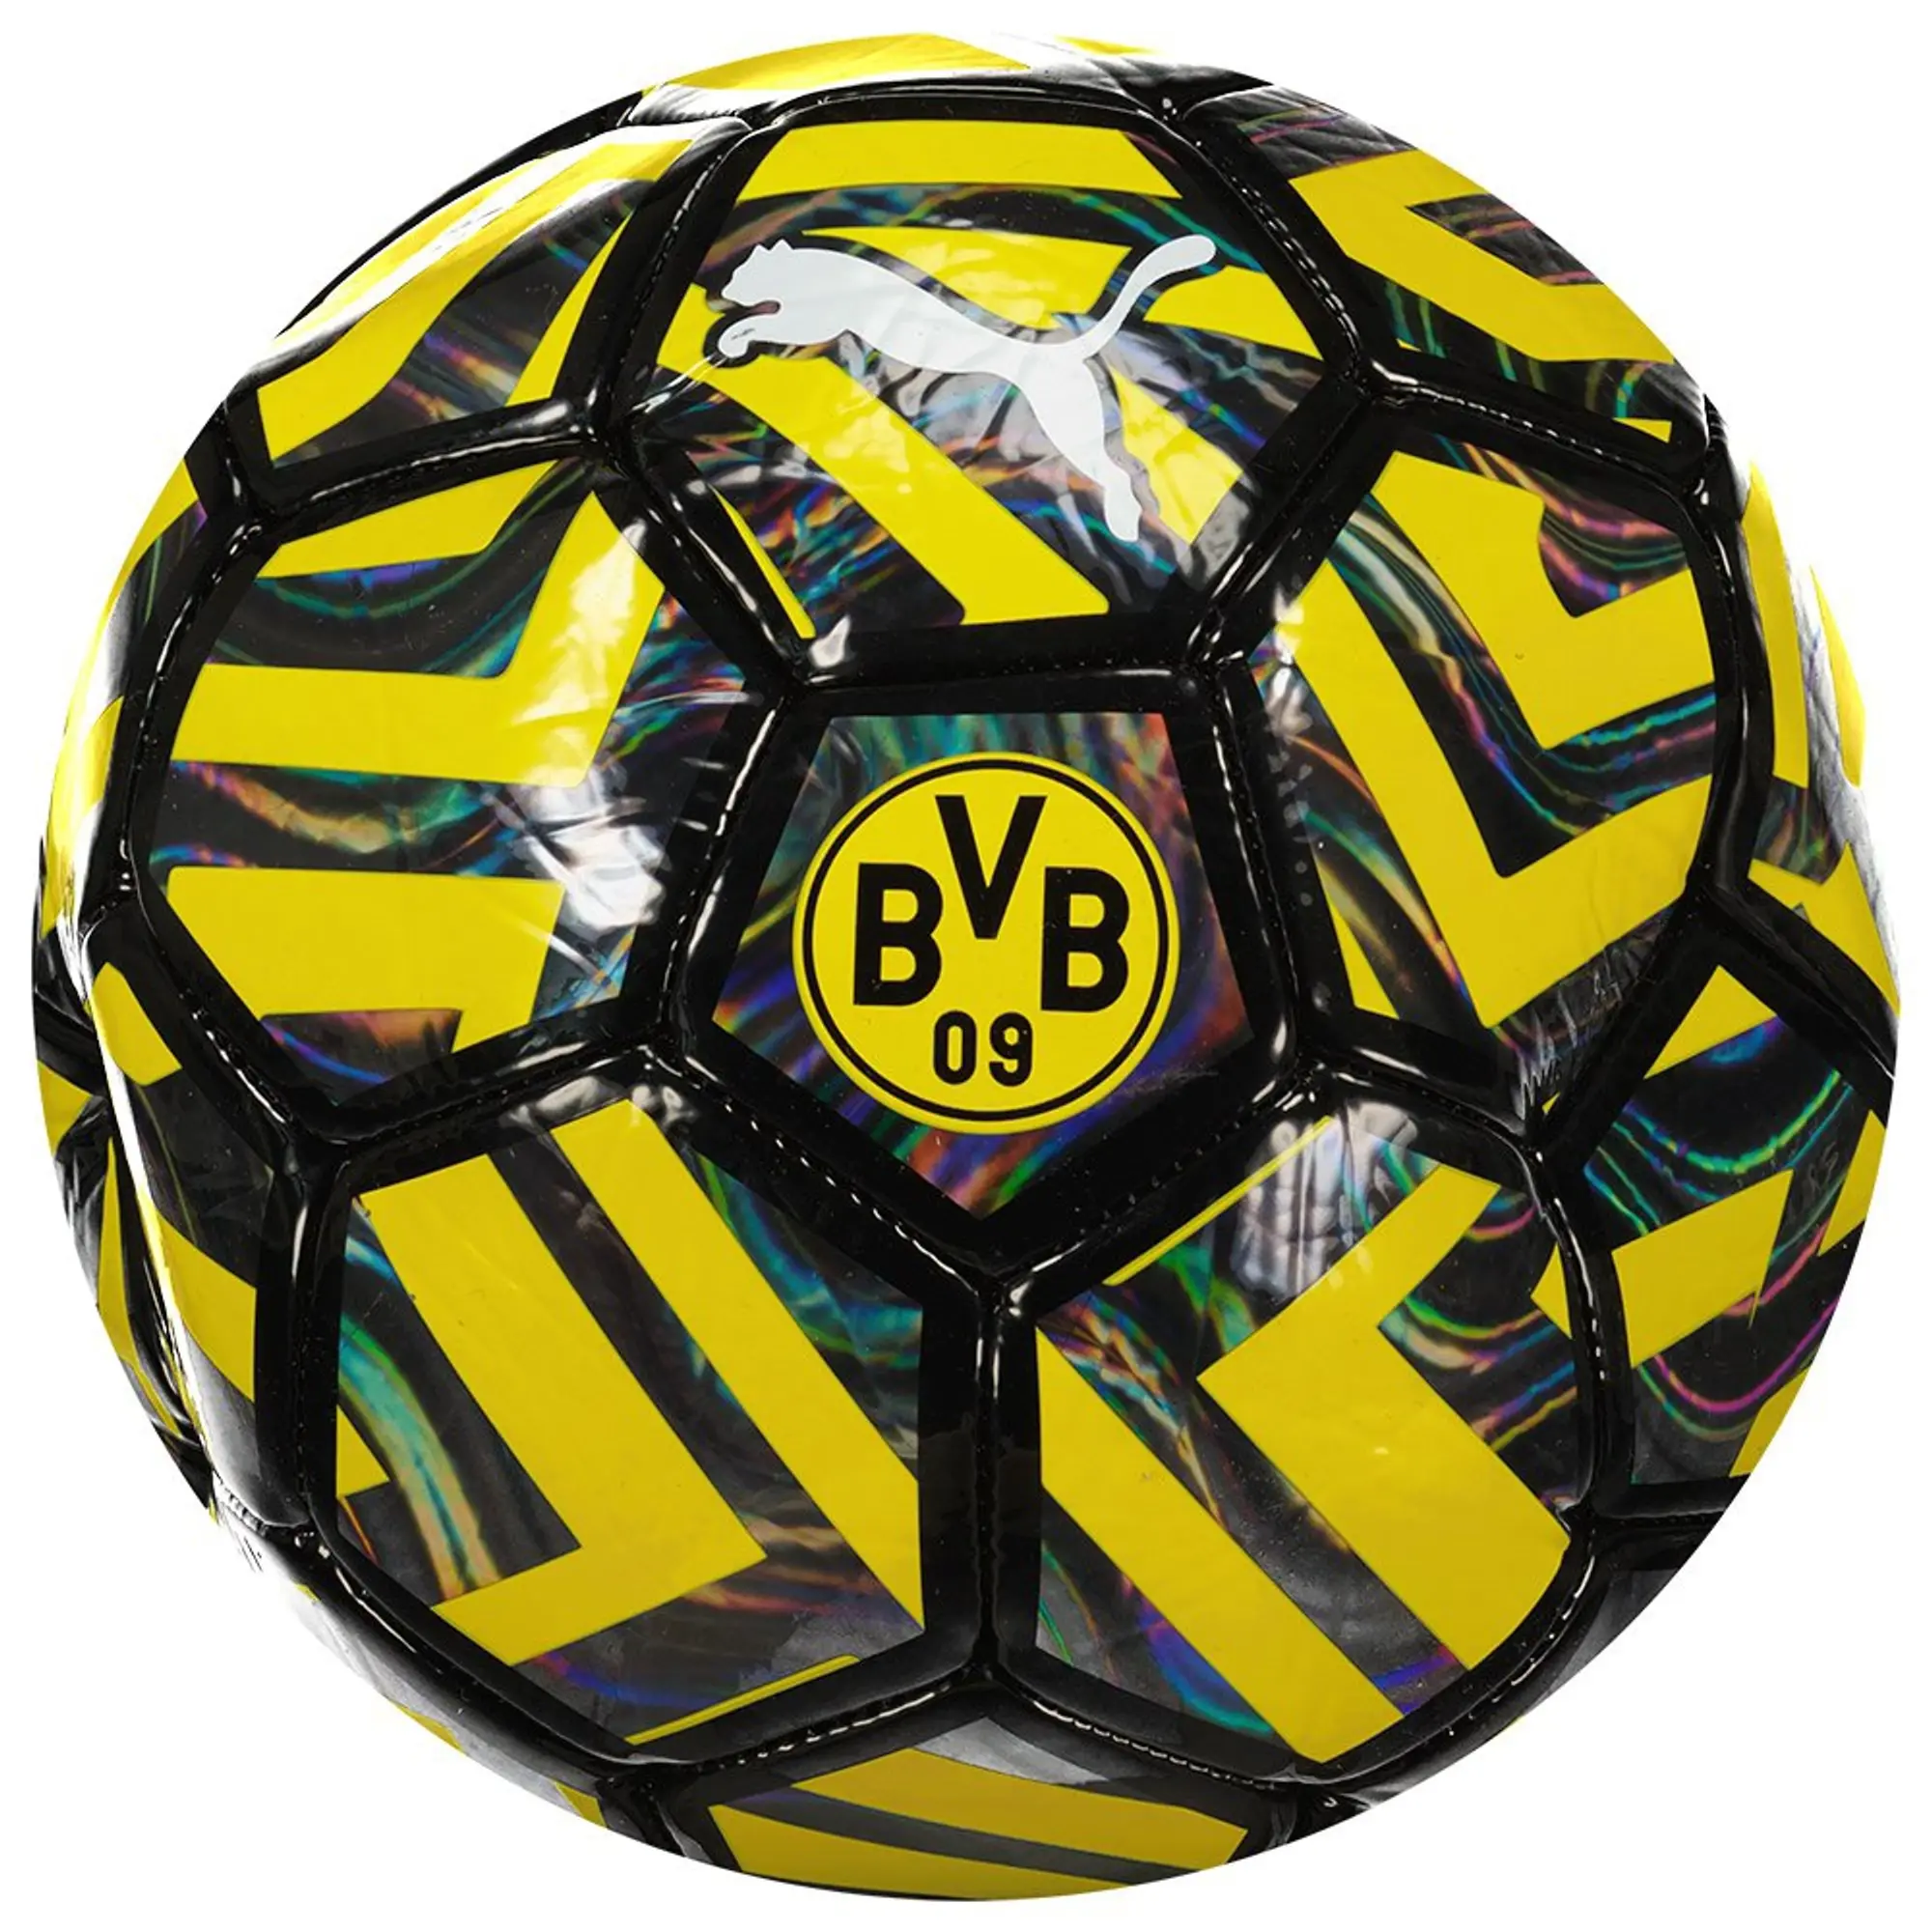 Puma Borussia Dortmund Fan Football - Yellow